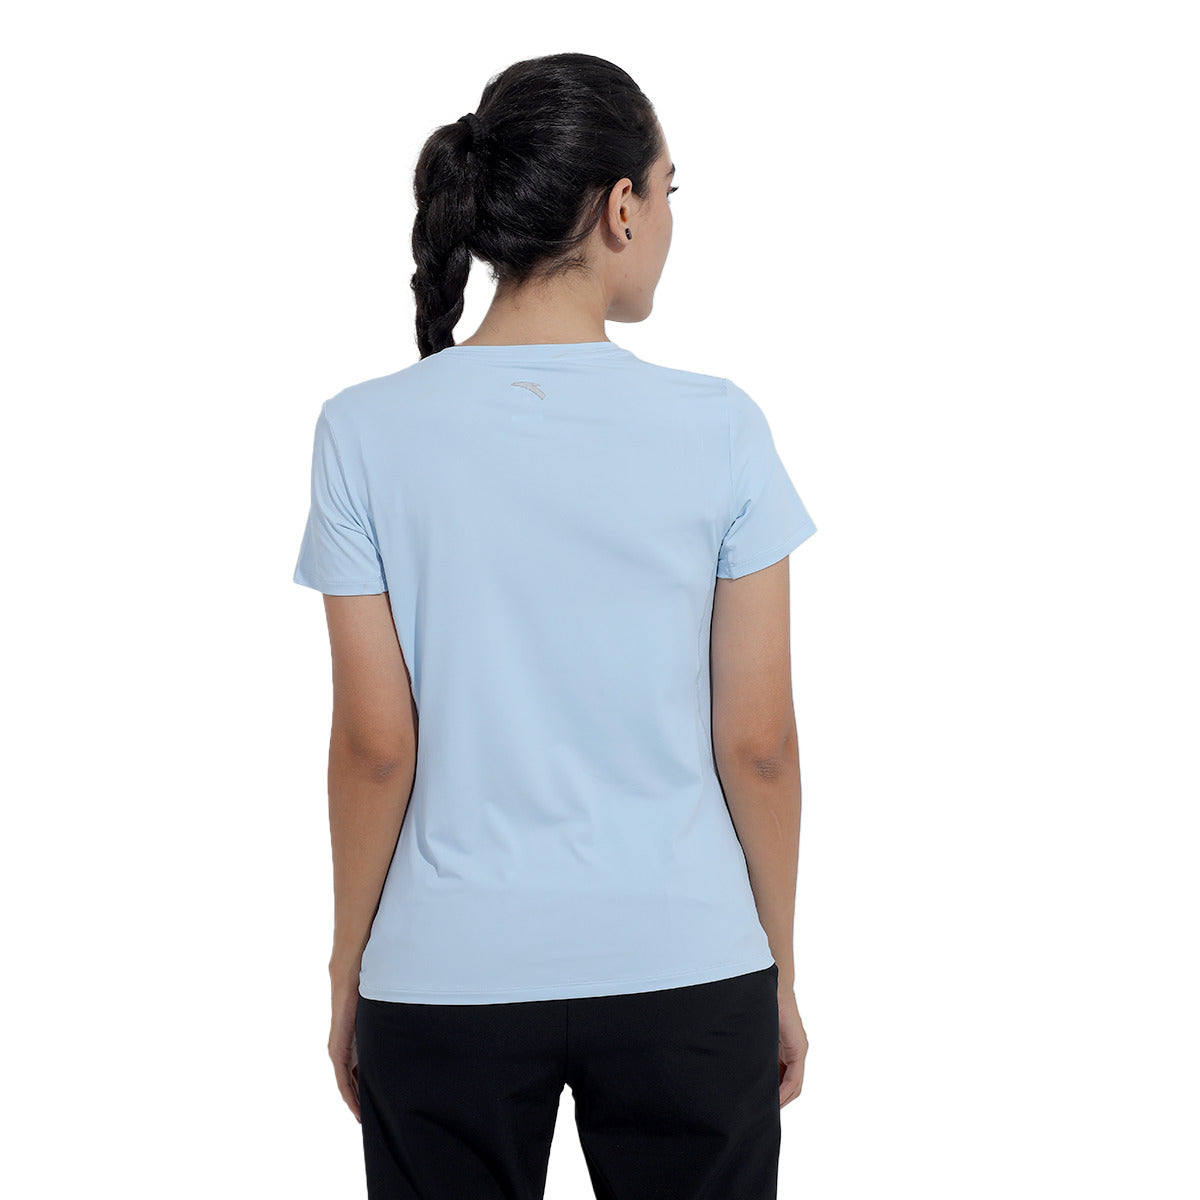 Anta Sports T-Shirt For Women, Sky Blue